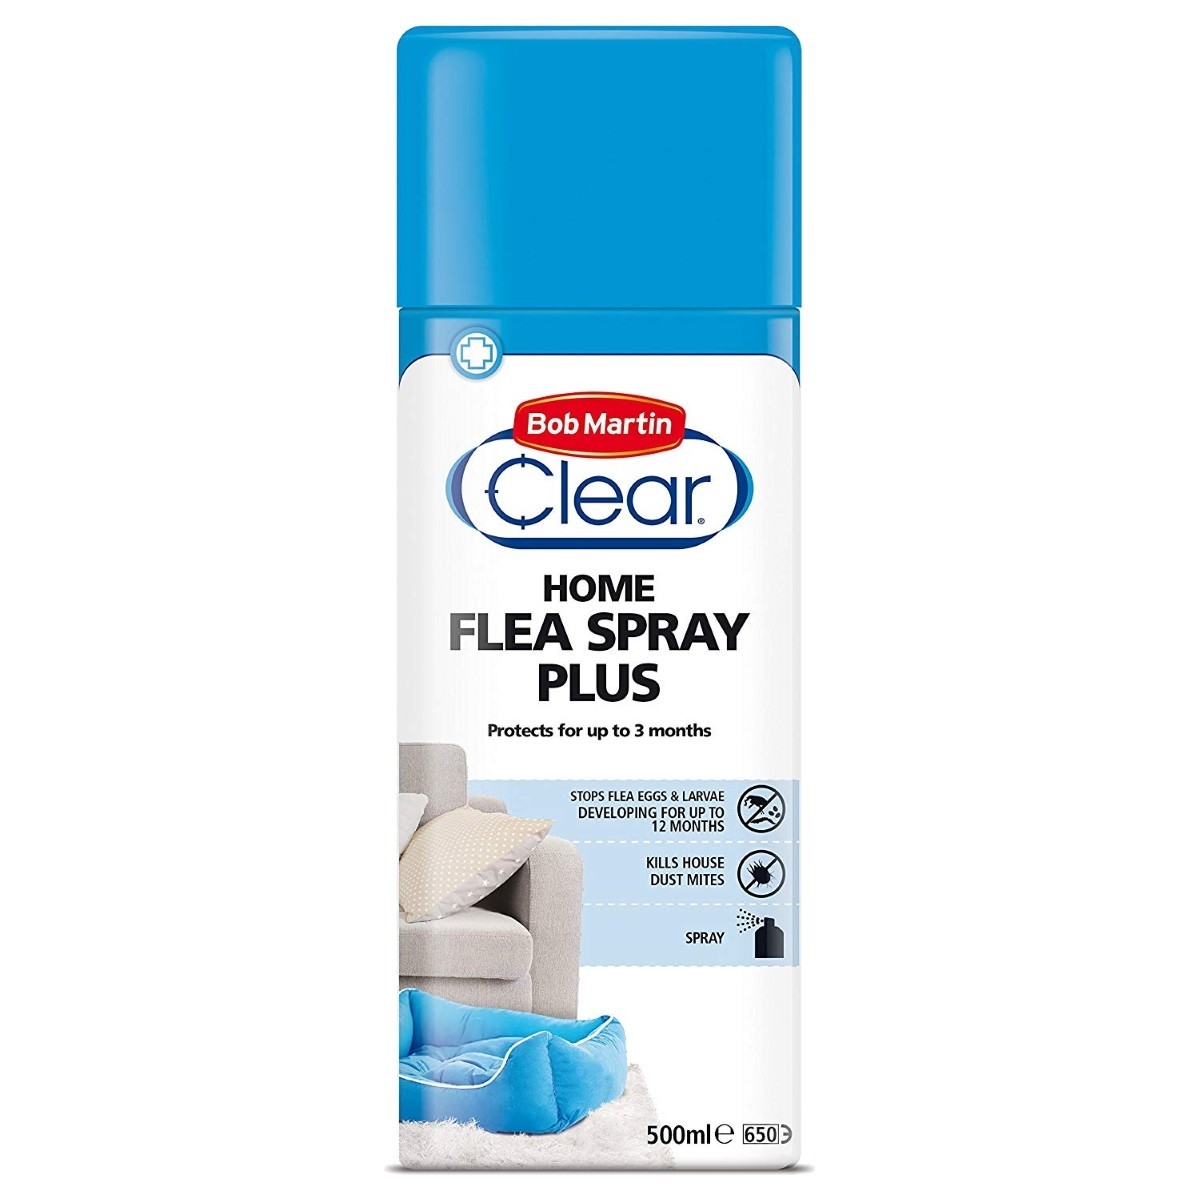 Clear home. Фли спрей. "Flea Spray" Melao. Dog Flea Spray.